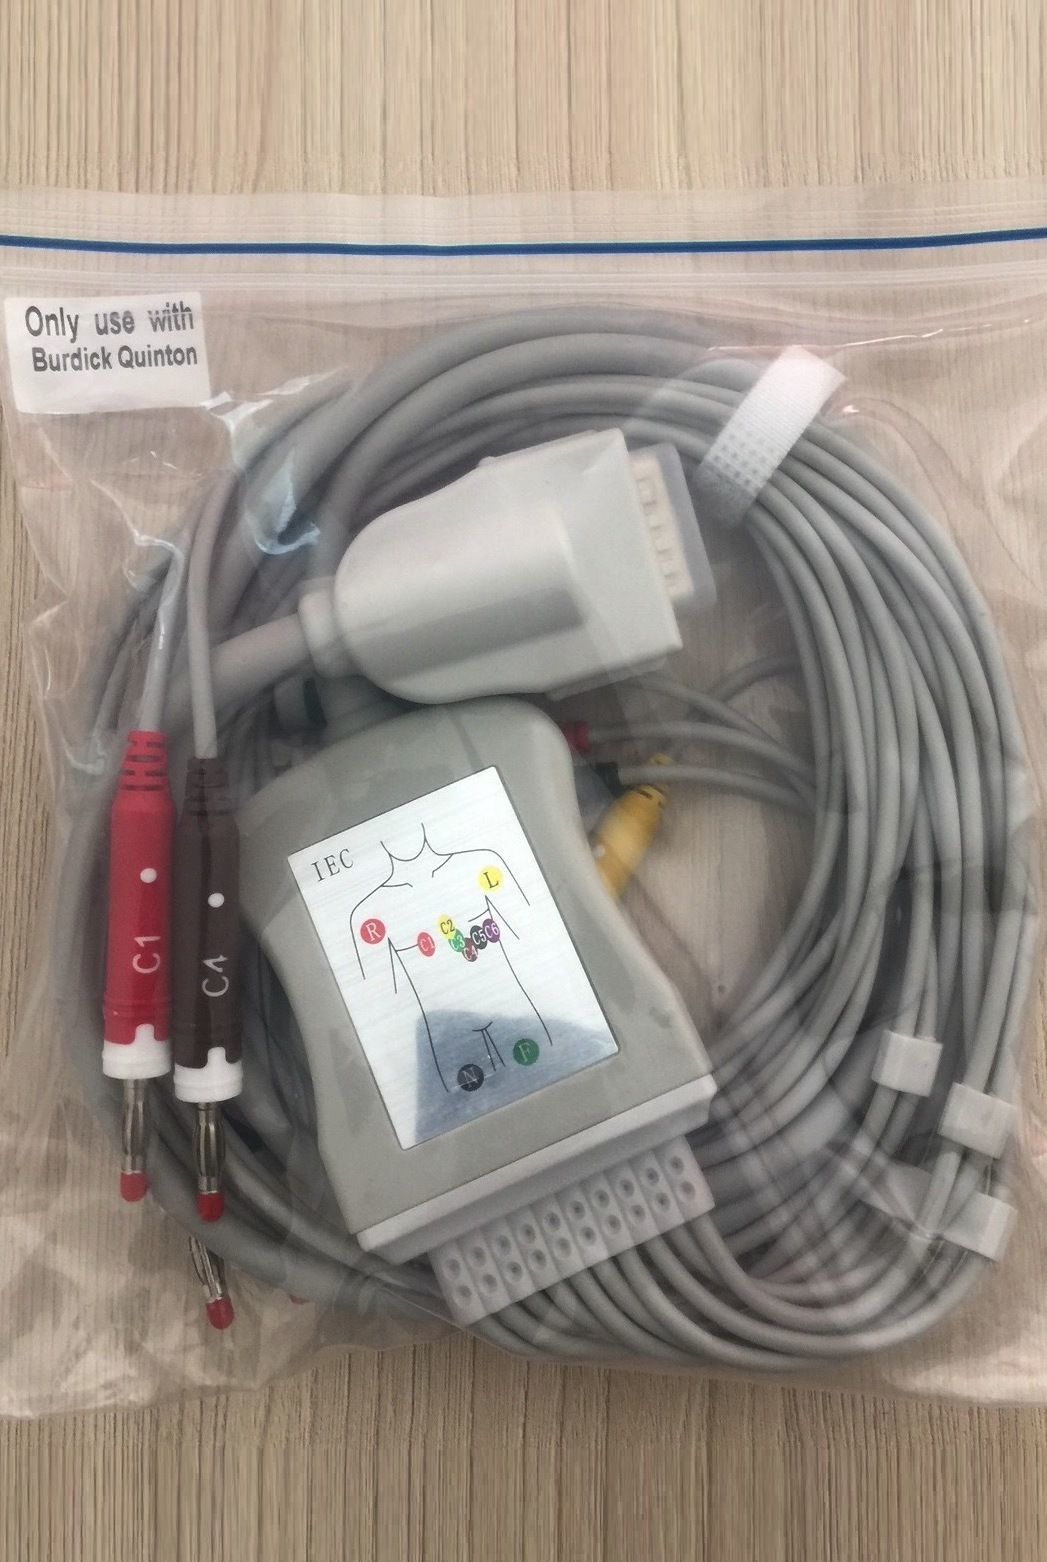 EKG Compatible Single Complete Cable for Burdick Quinton EKG Unit_สายอีเคจีสำหนับเครื่องวัดบันทึกค่าคลื่นไฟฟ้าหัวใจ Burdick